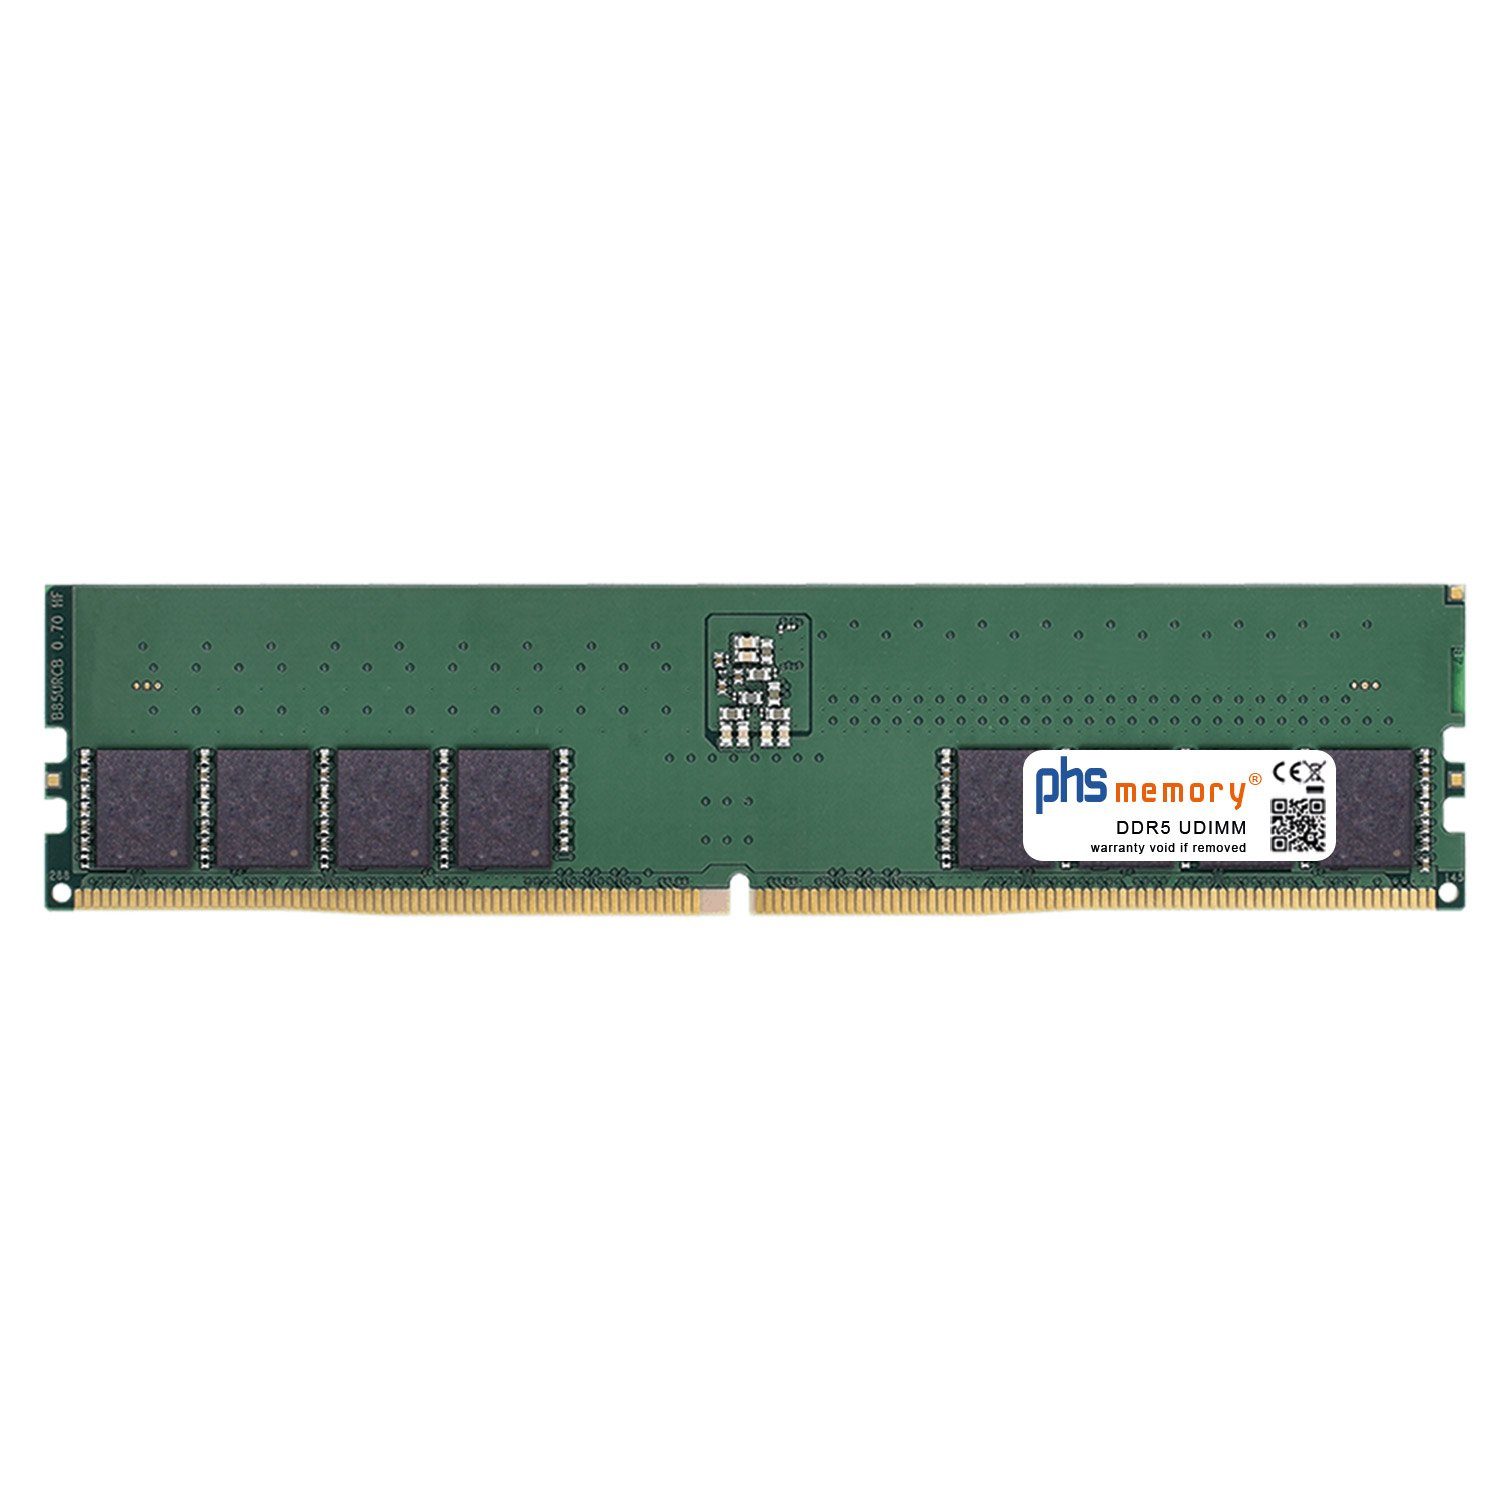 PHS-memory RAM für Captiva Ultimate Gaming I71-177 Arbeitsspeicher